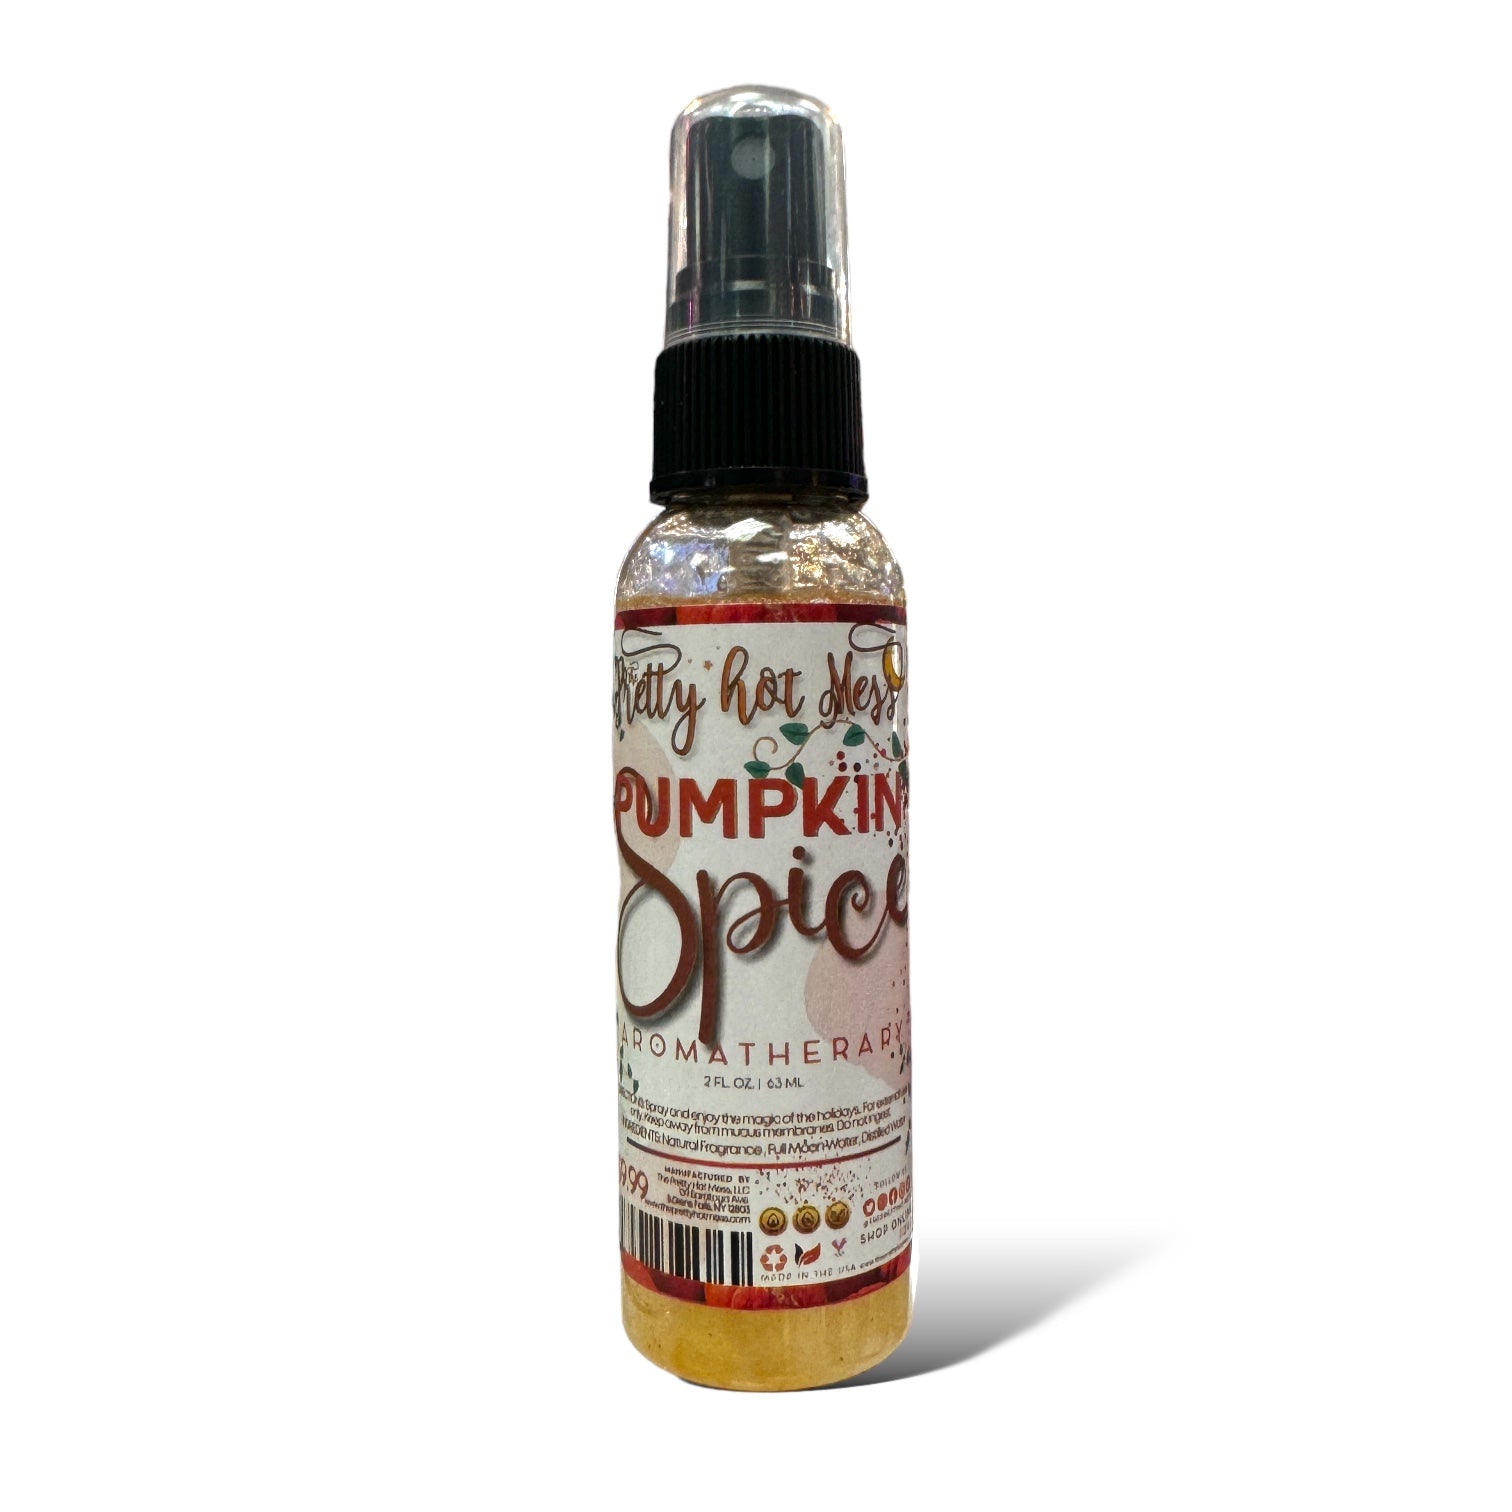 Pumpkin Spice Aromatherapy